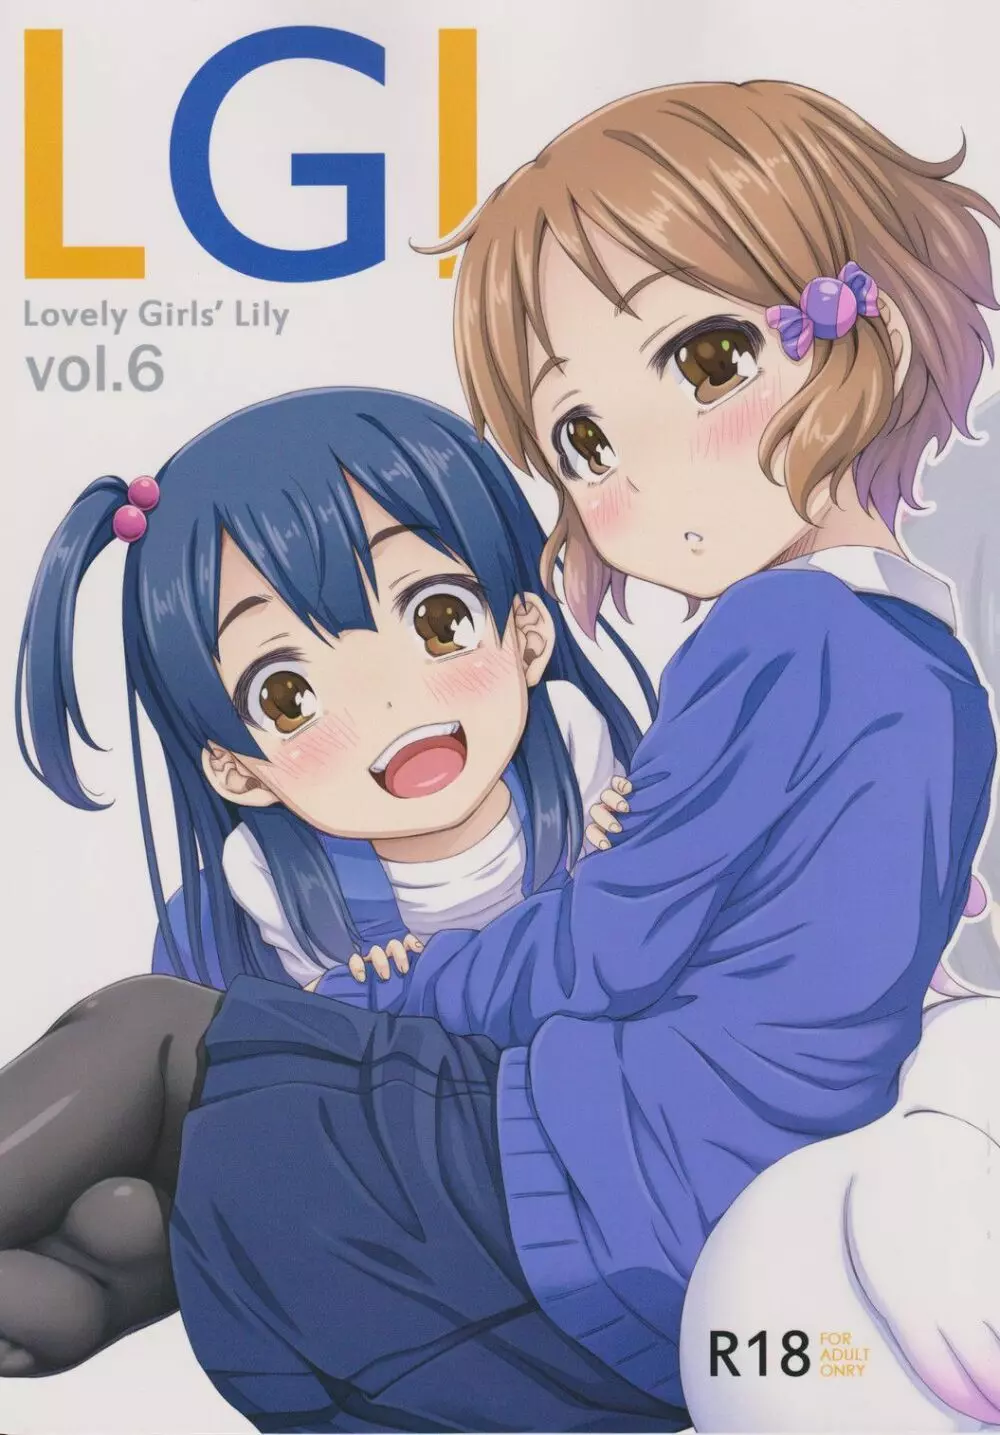 Lovely Girls' Lily vol.6